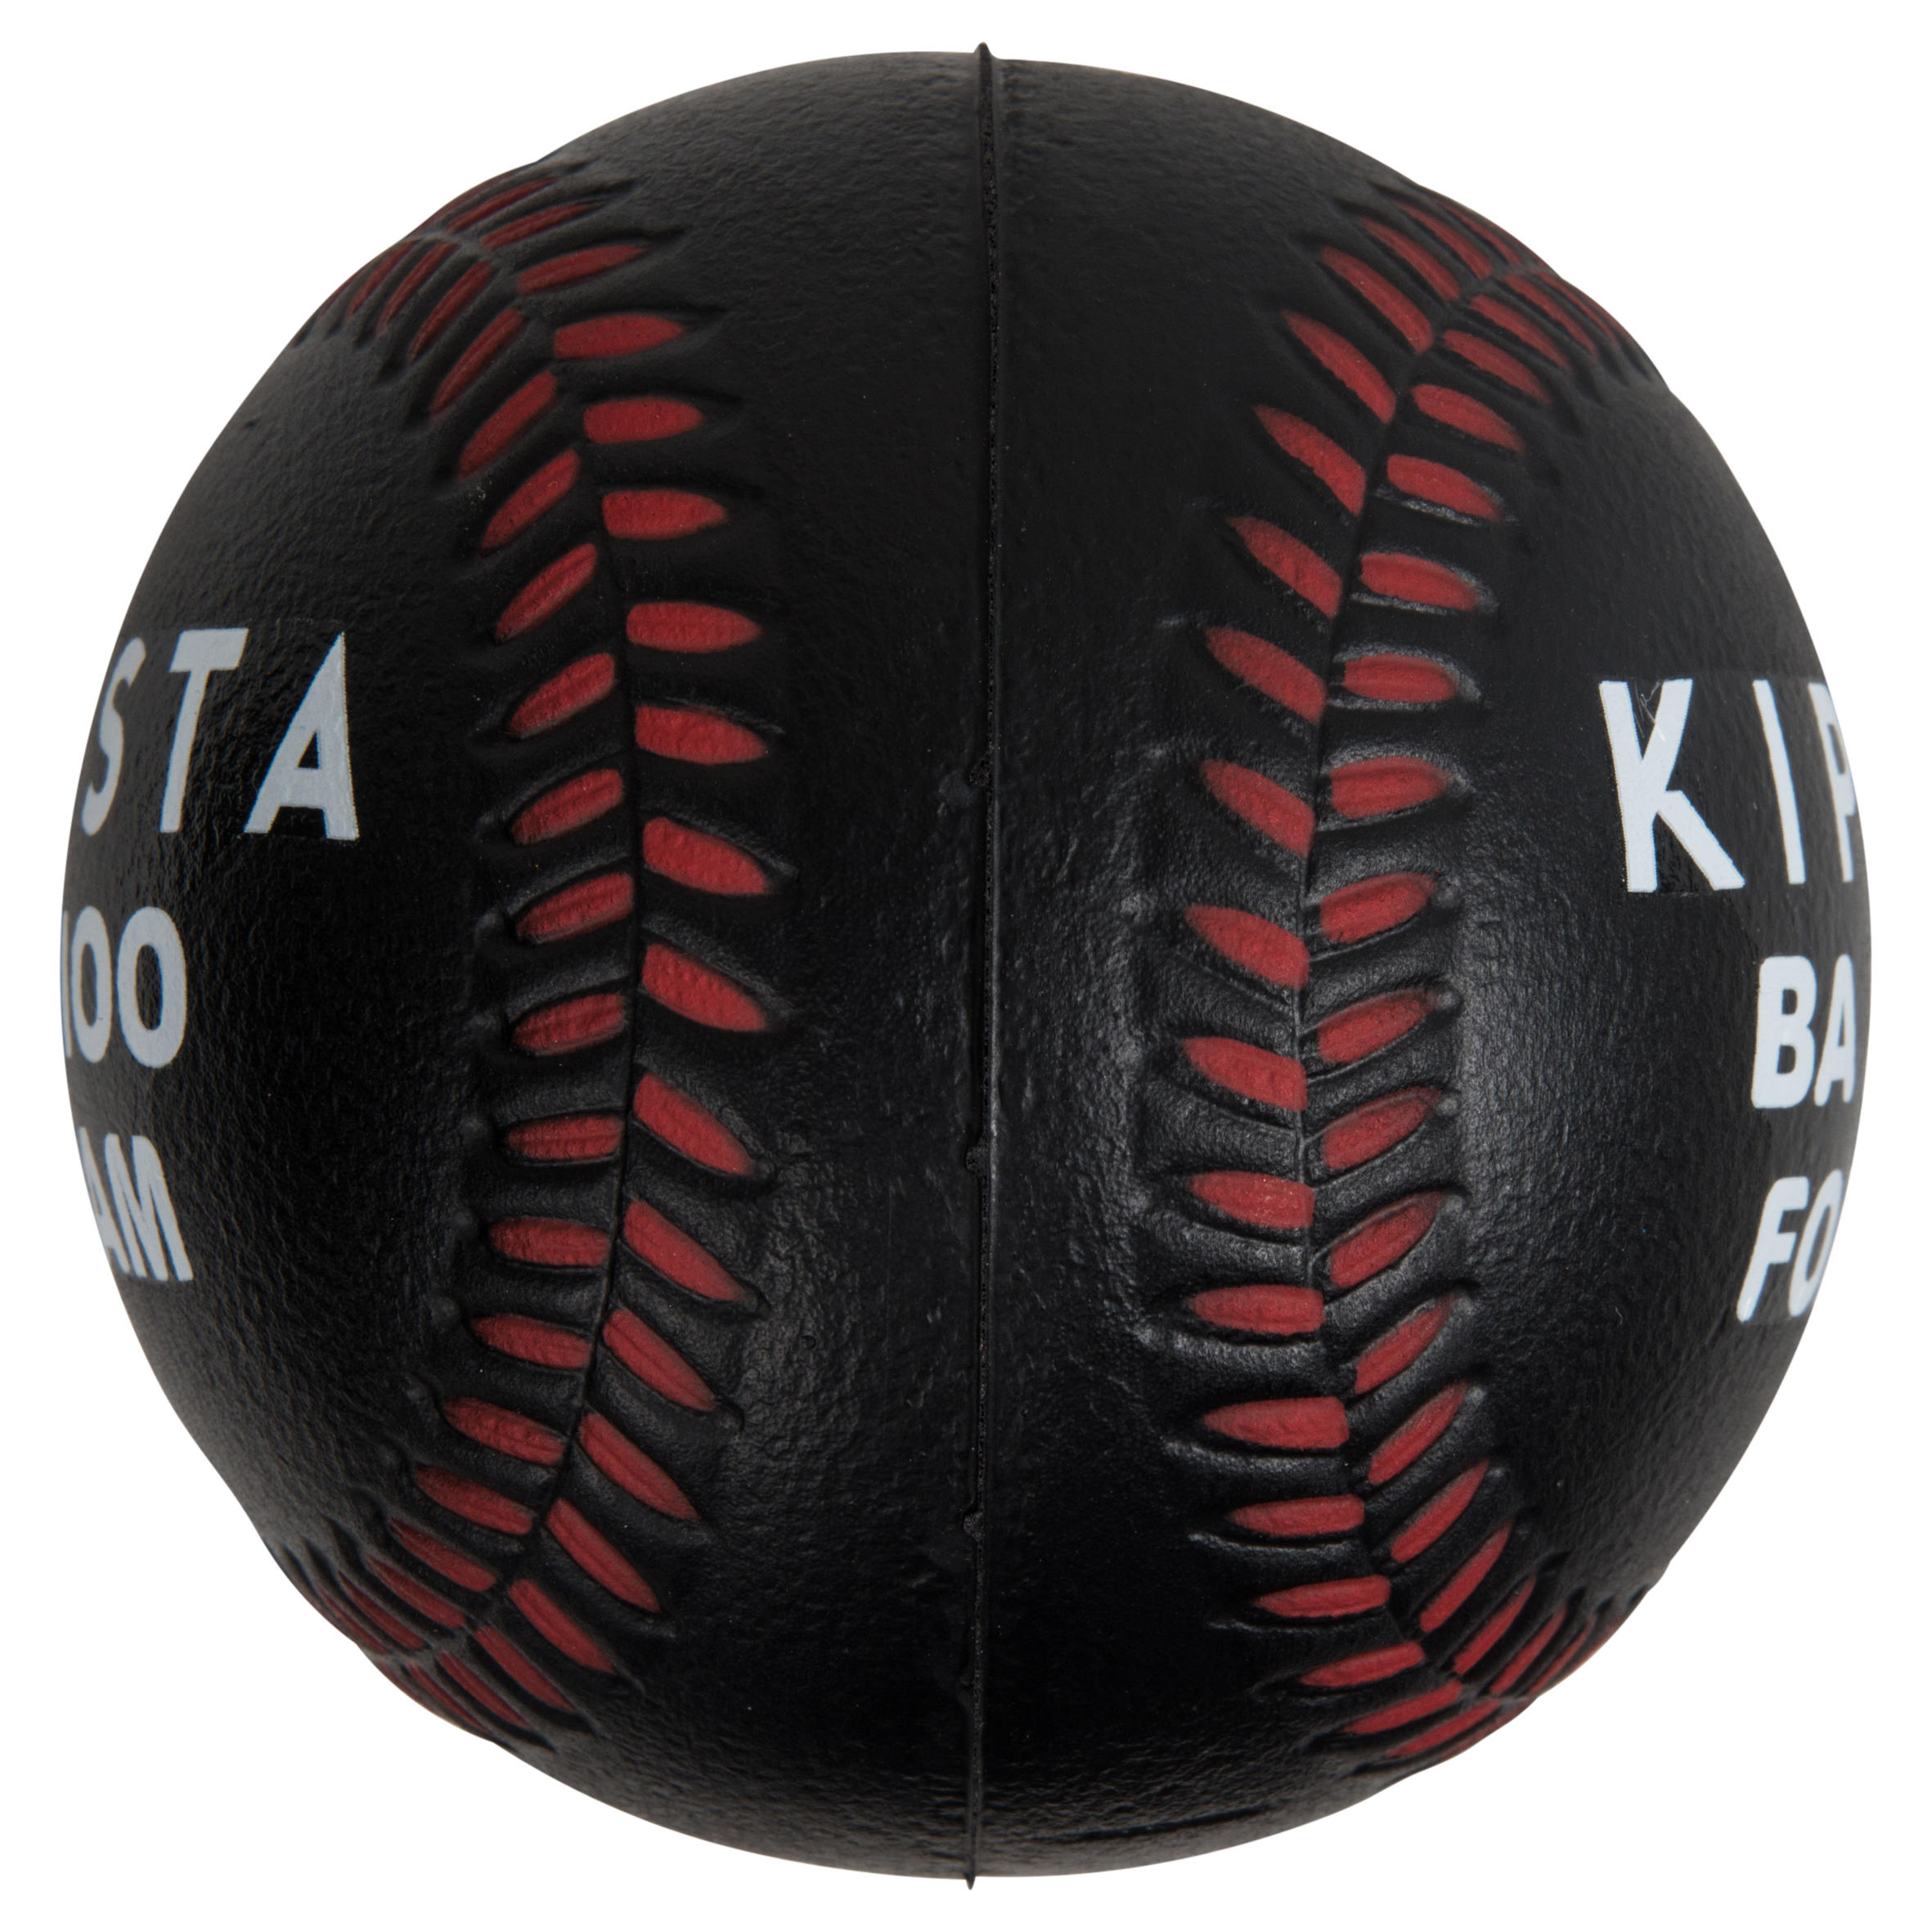 Balle de baseball en mousse BA100 - KIPSTA